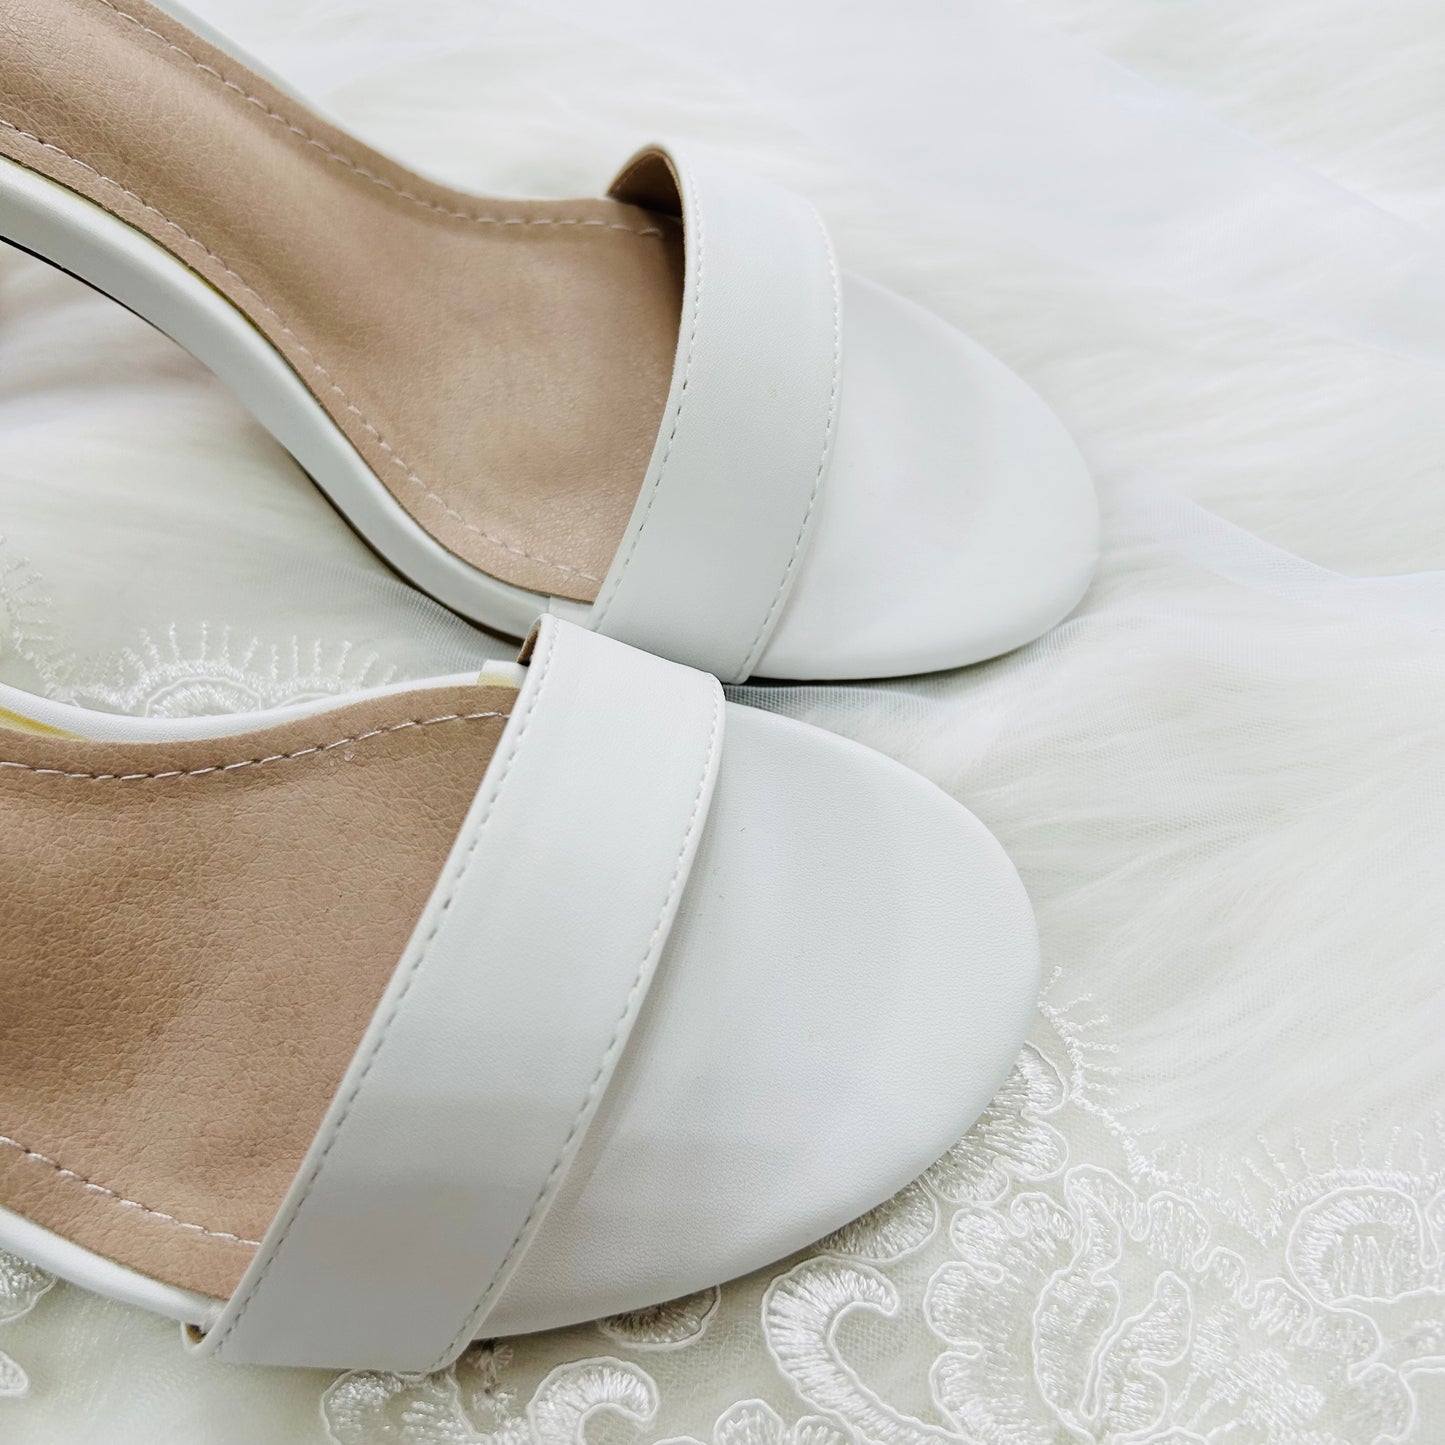 hydrangea-wedding-shoes